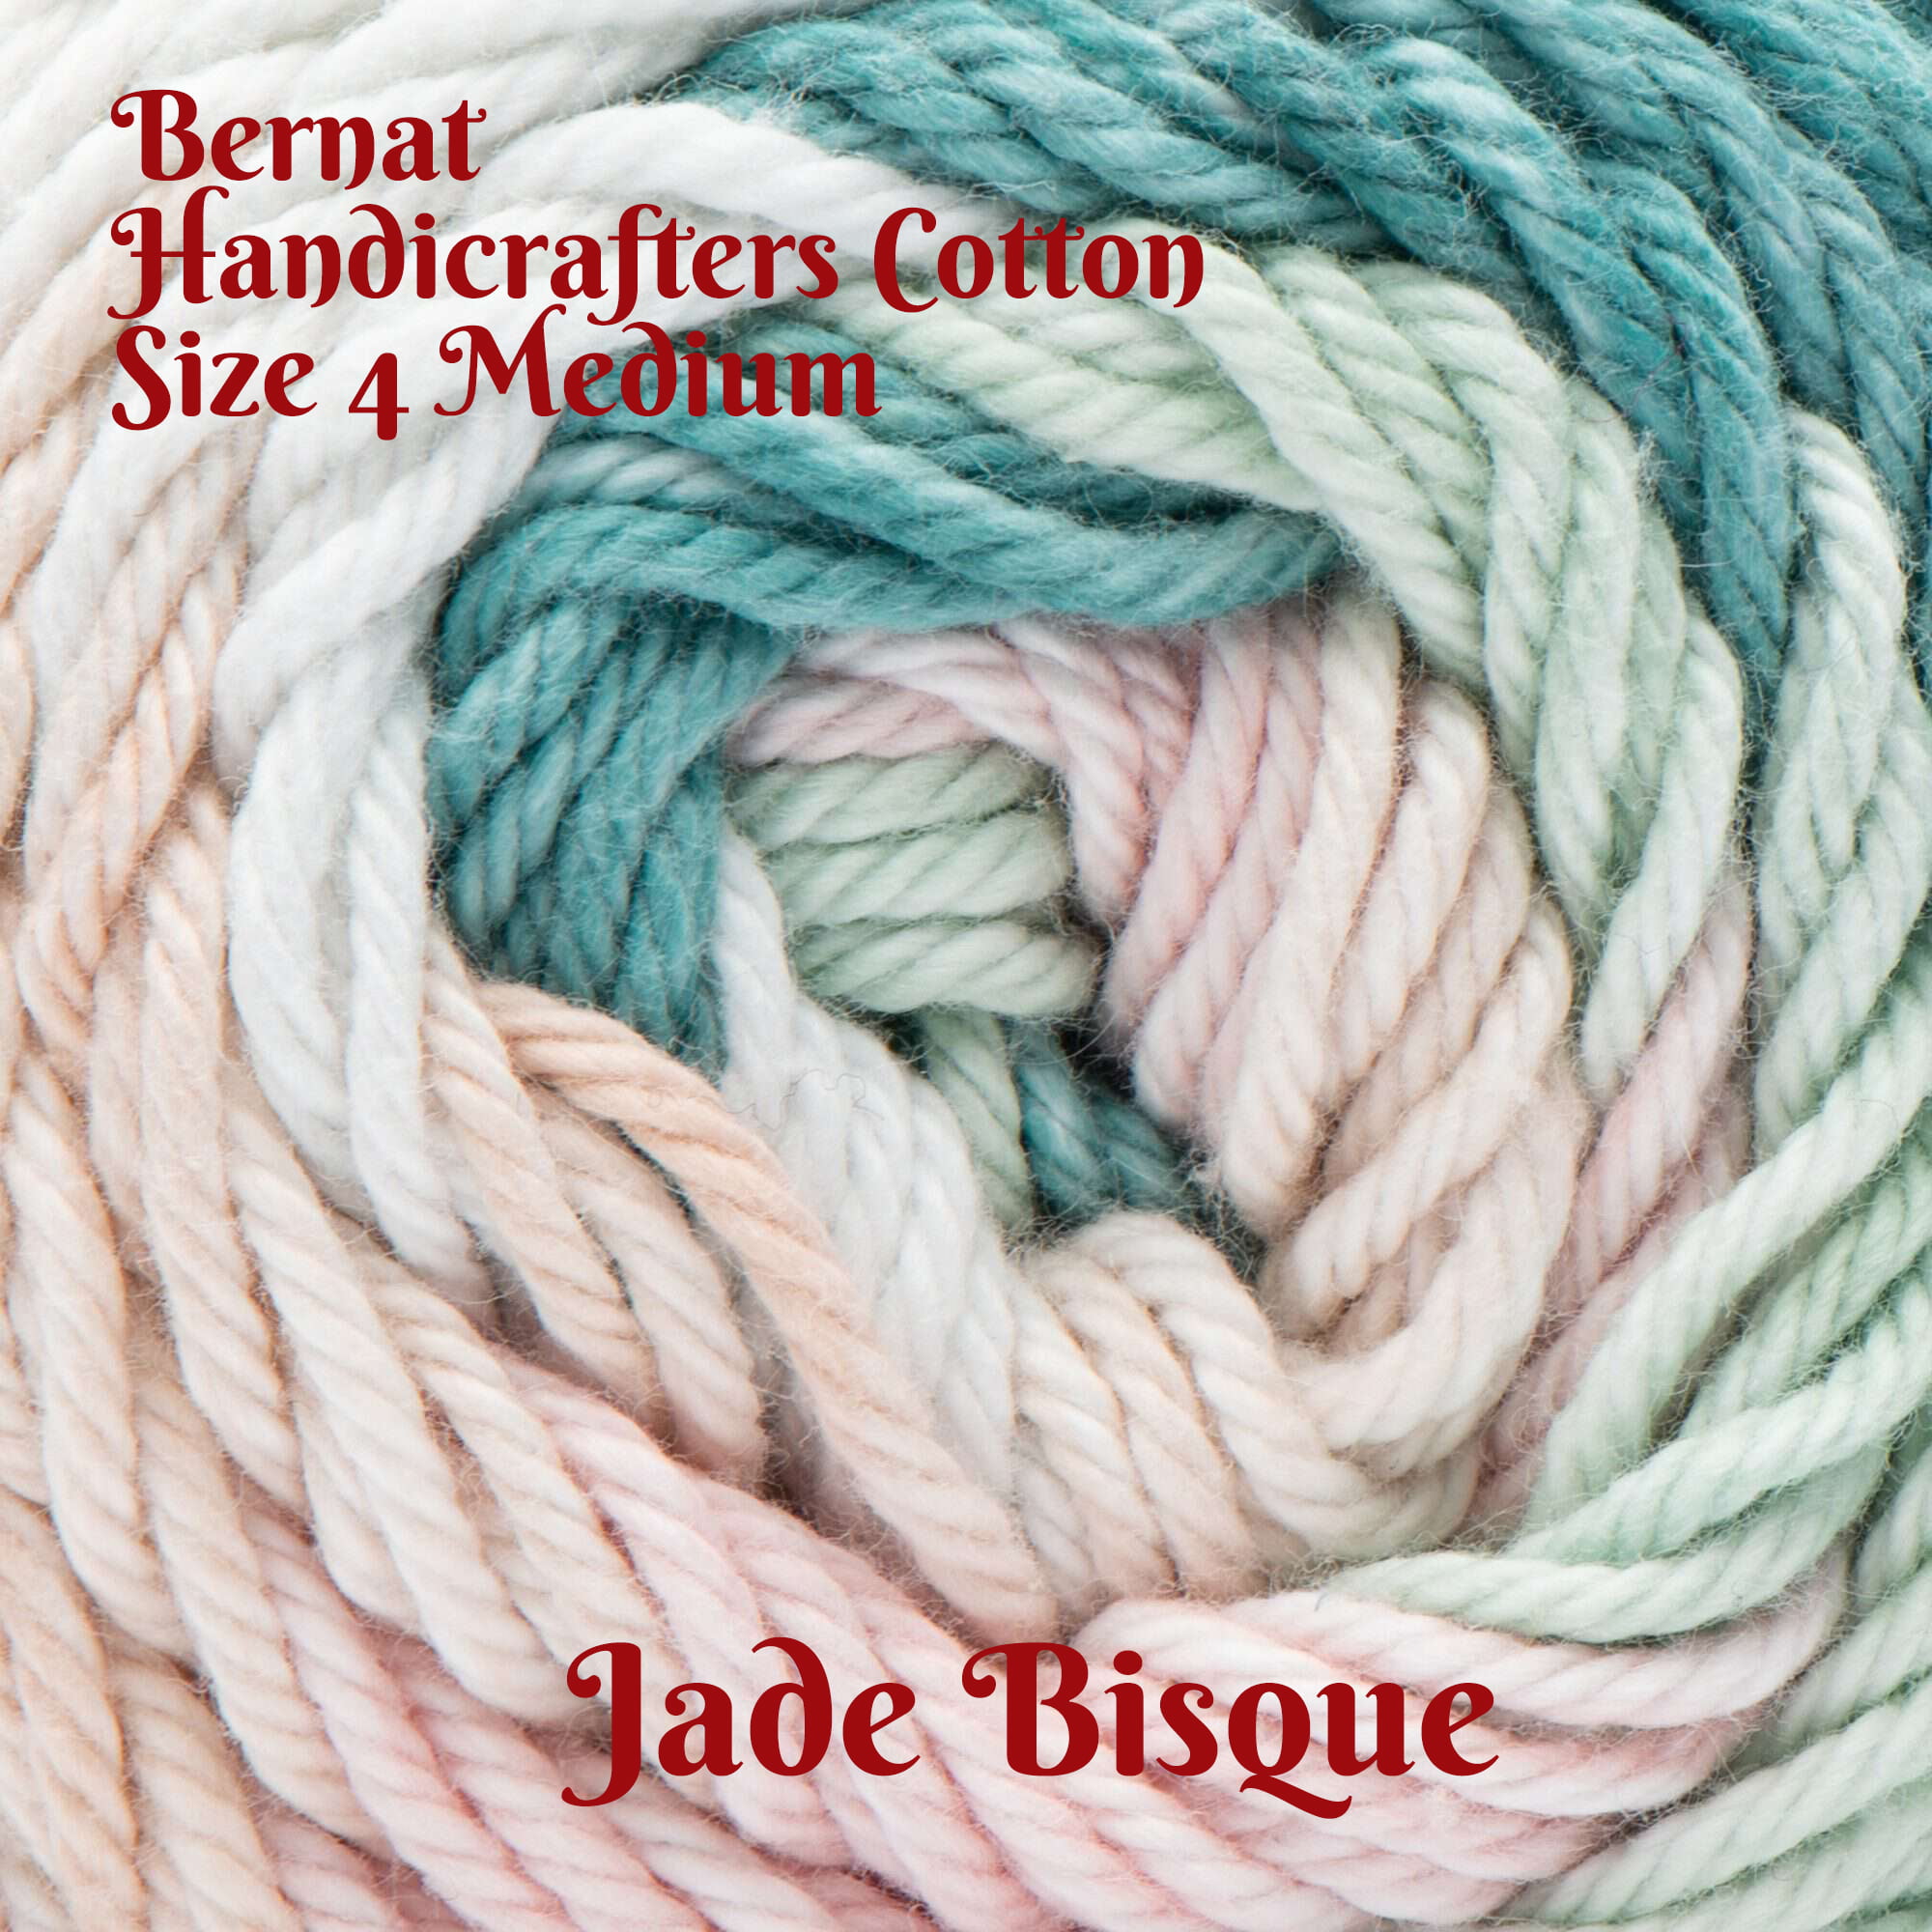 Bernat Handicrafter Cotton Yarn - Big Ball (4 - Medium) By Bernat